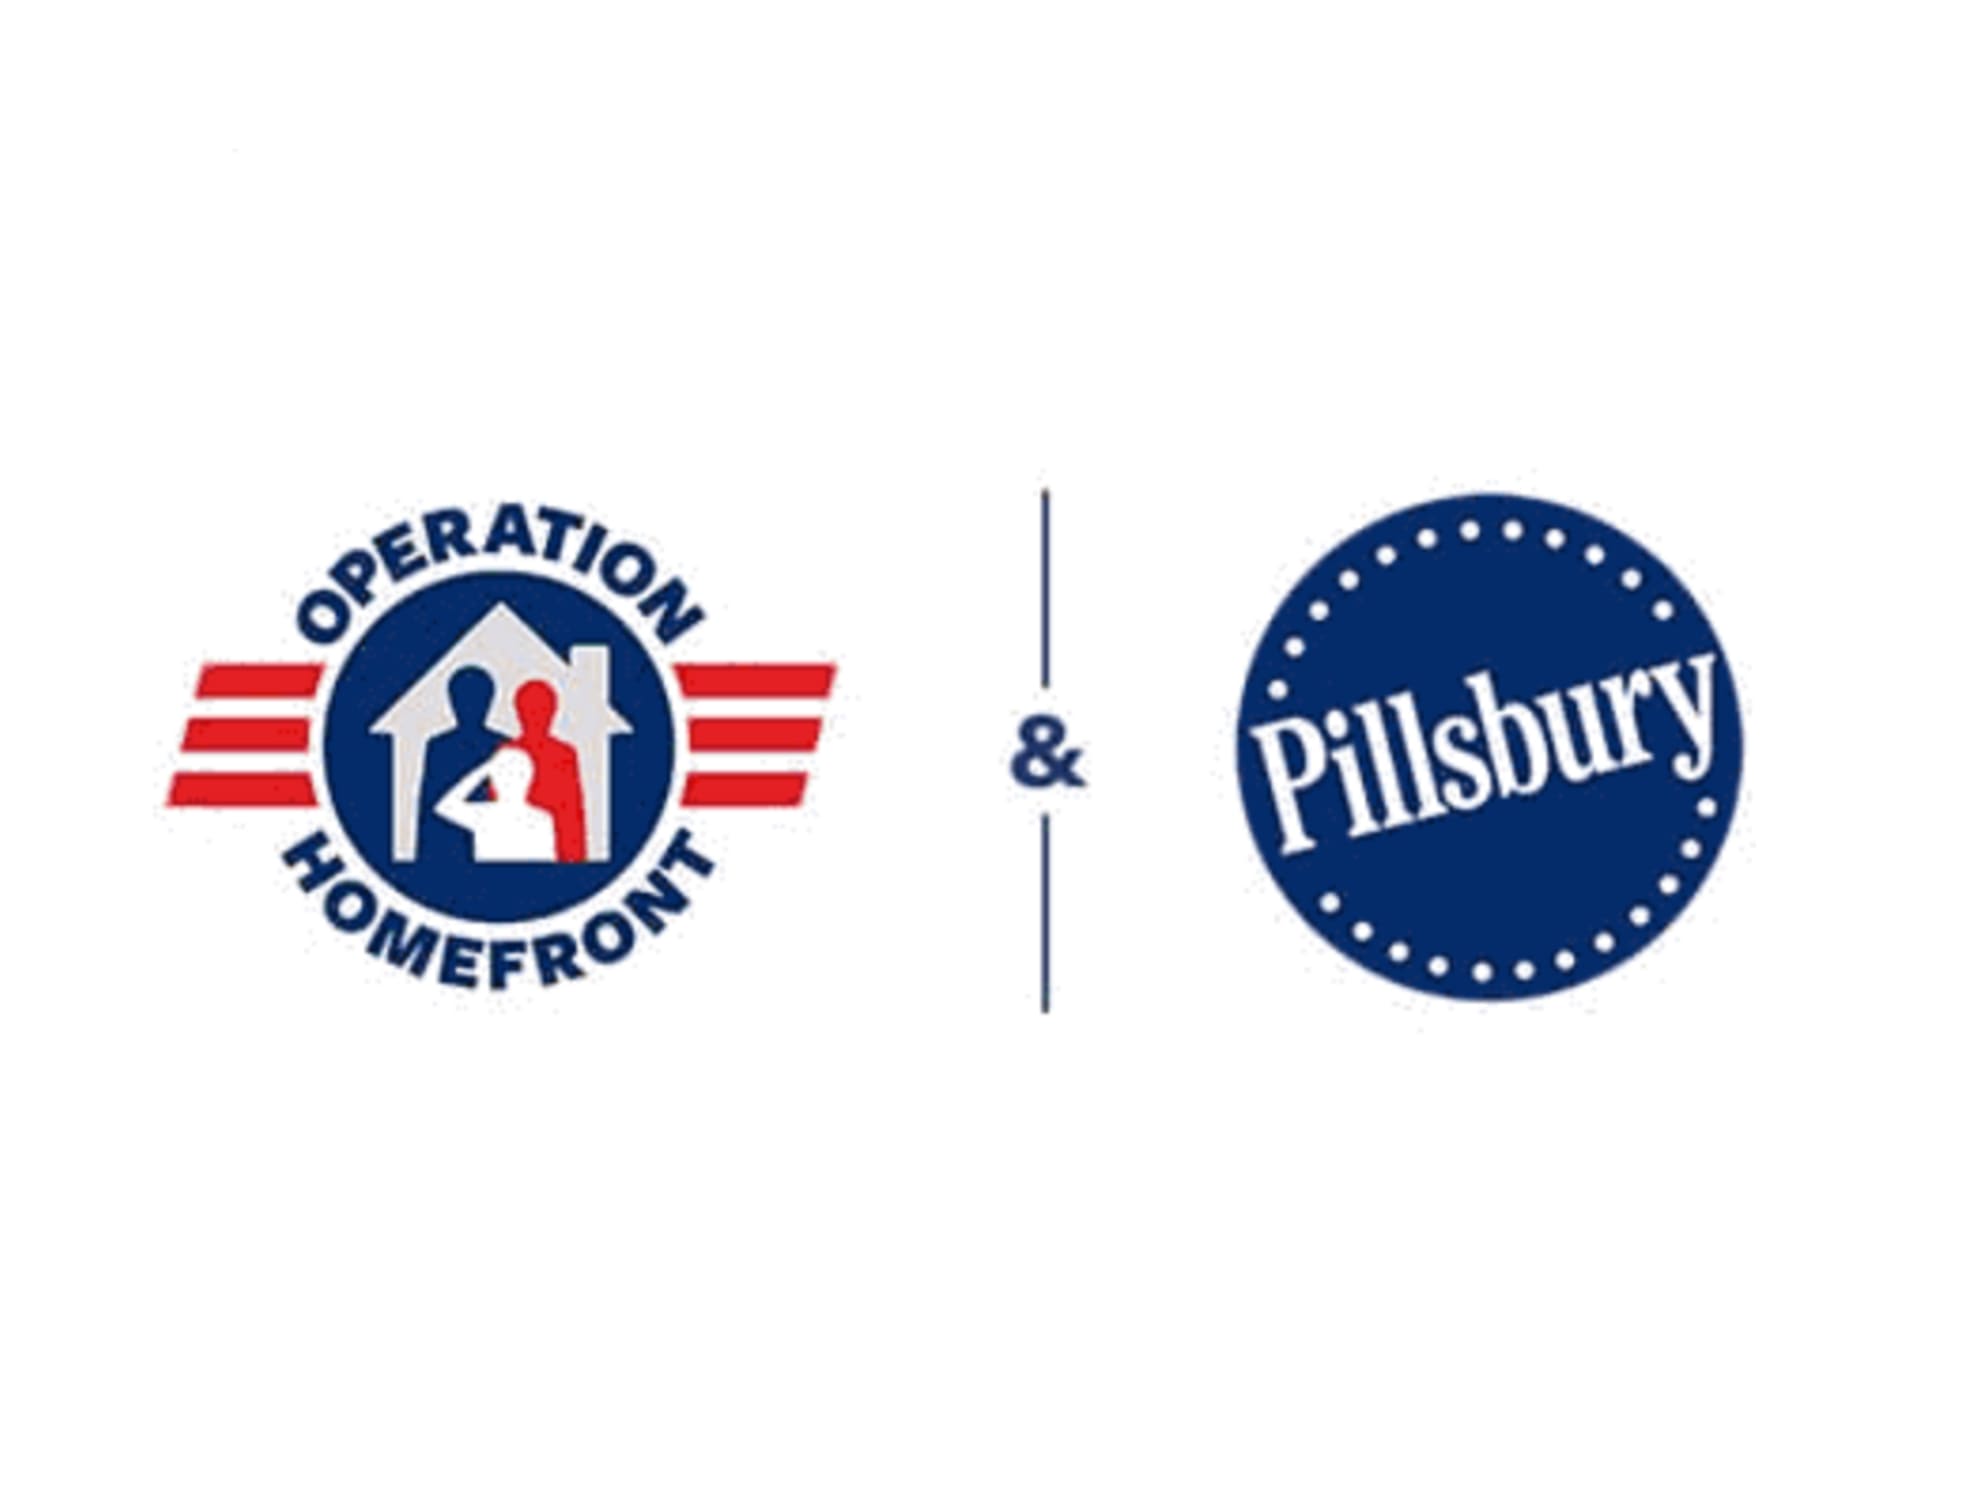 Operation homefront and Pillsbury logos